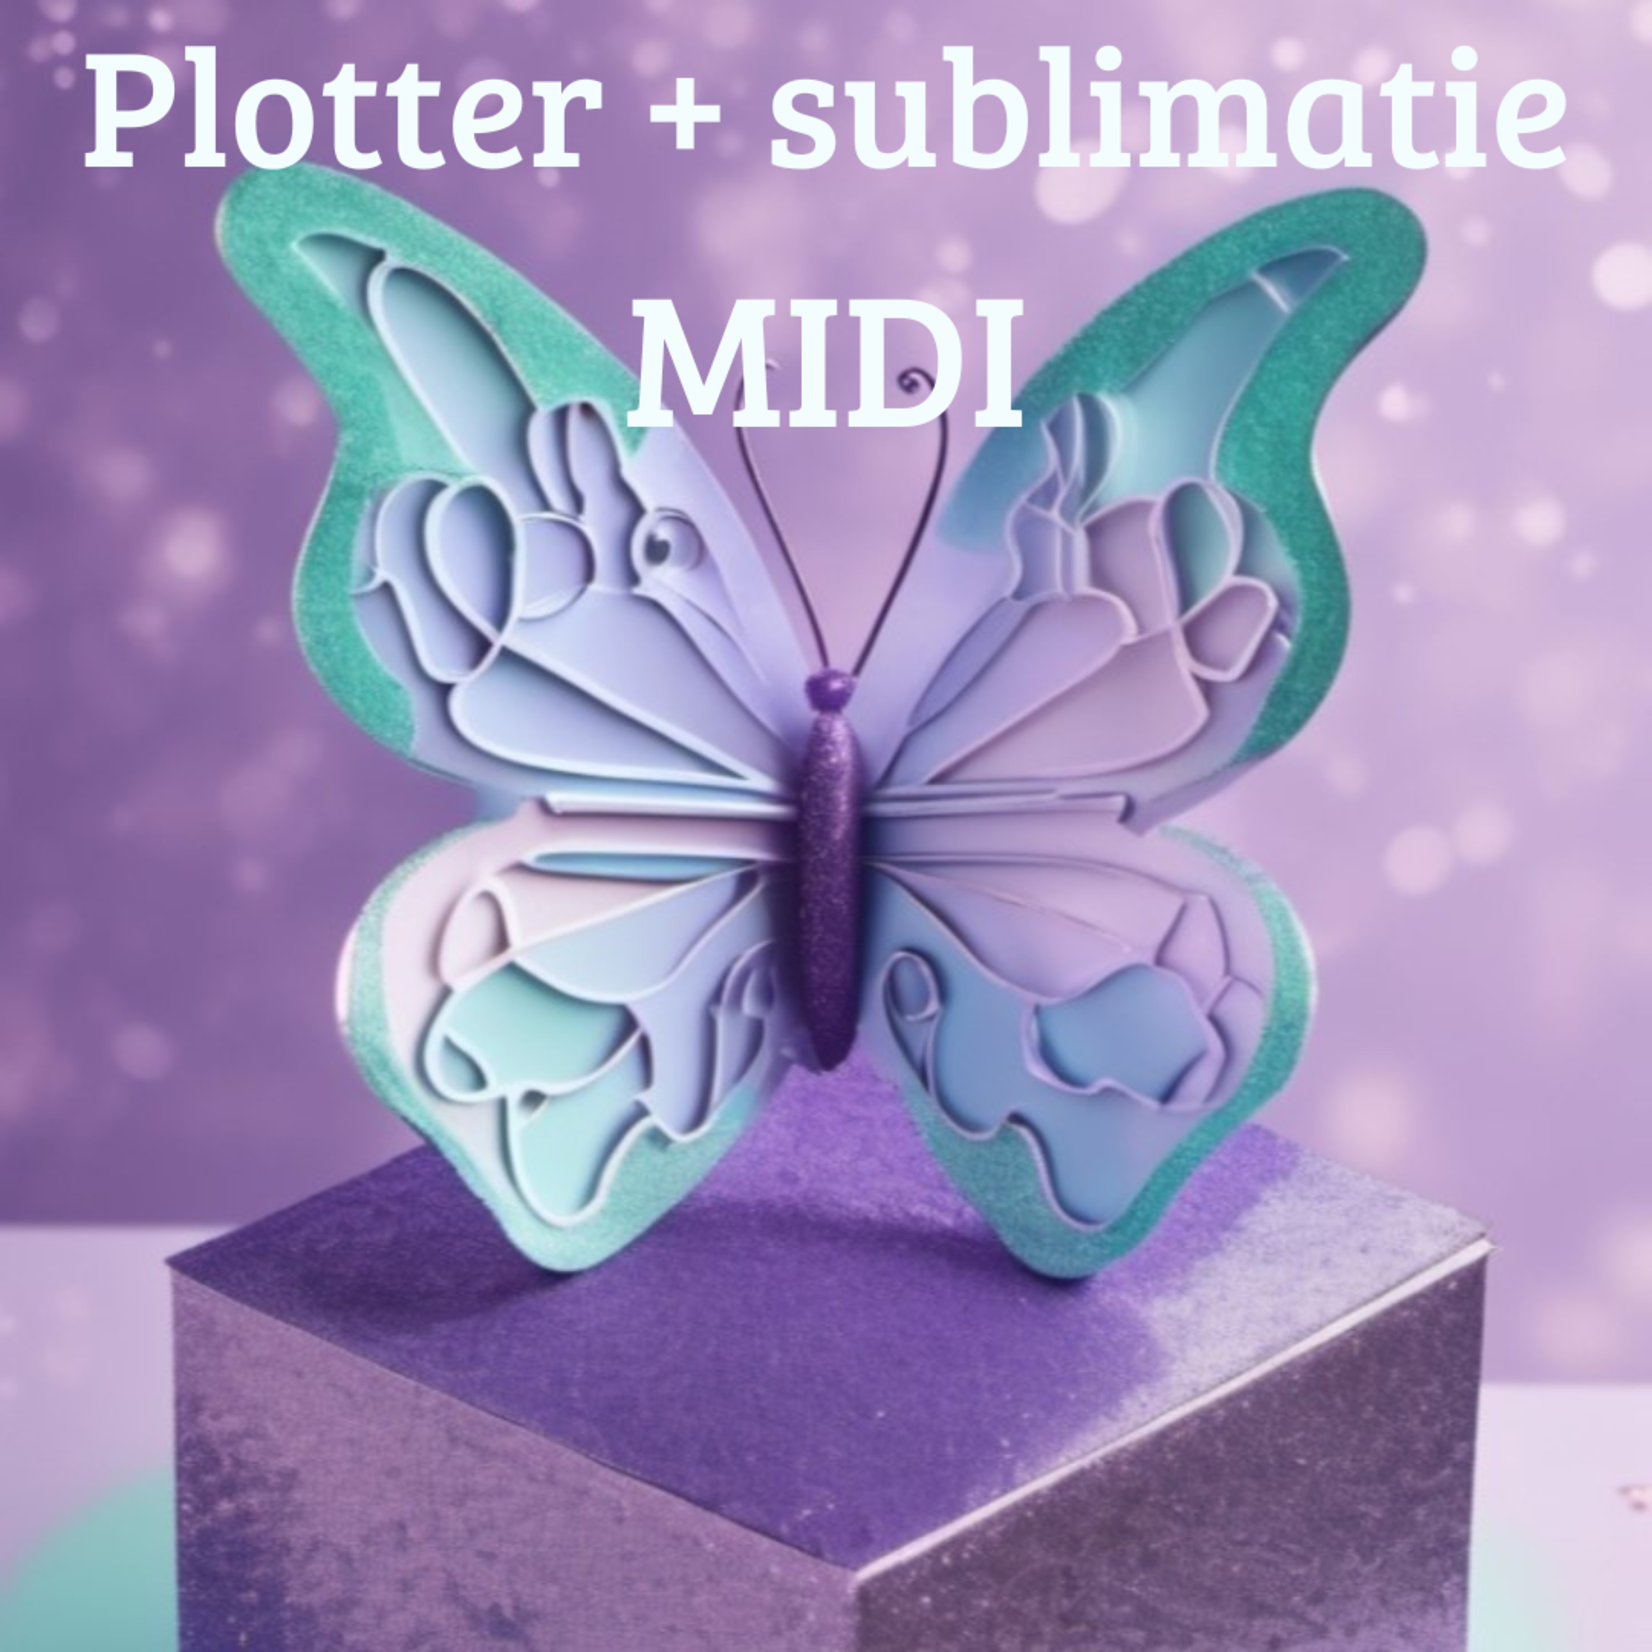 Mystery box plotter + sublimatie (MIDI)